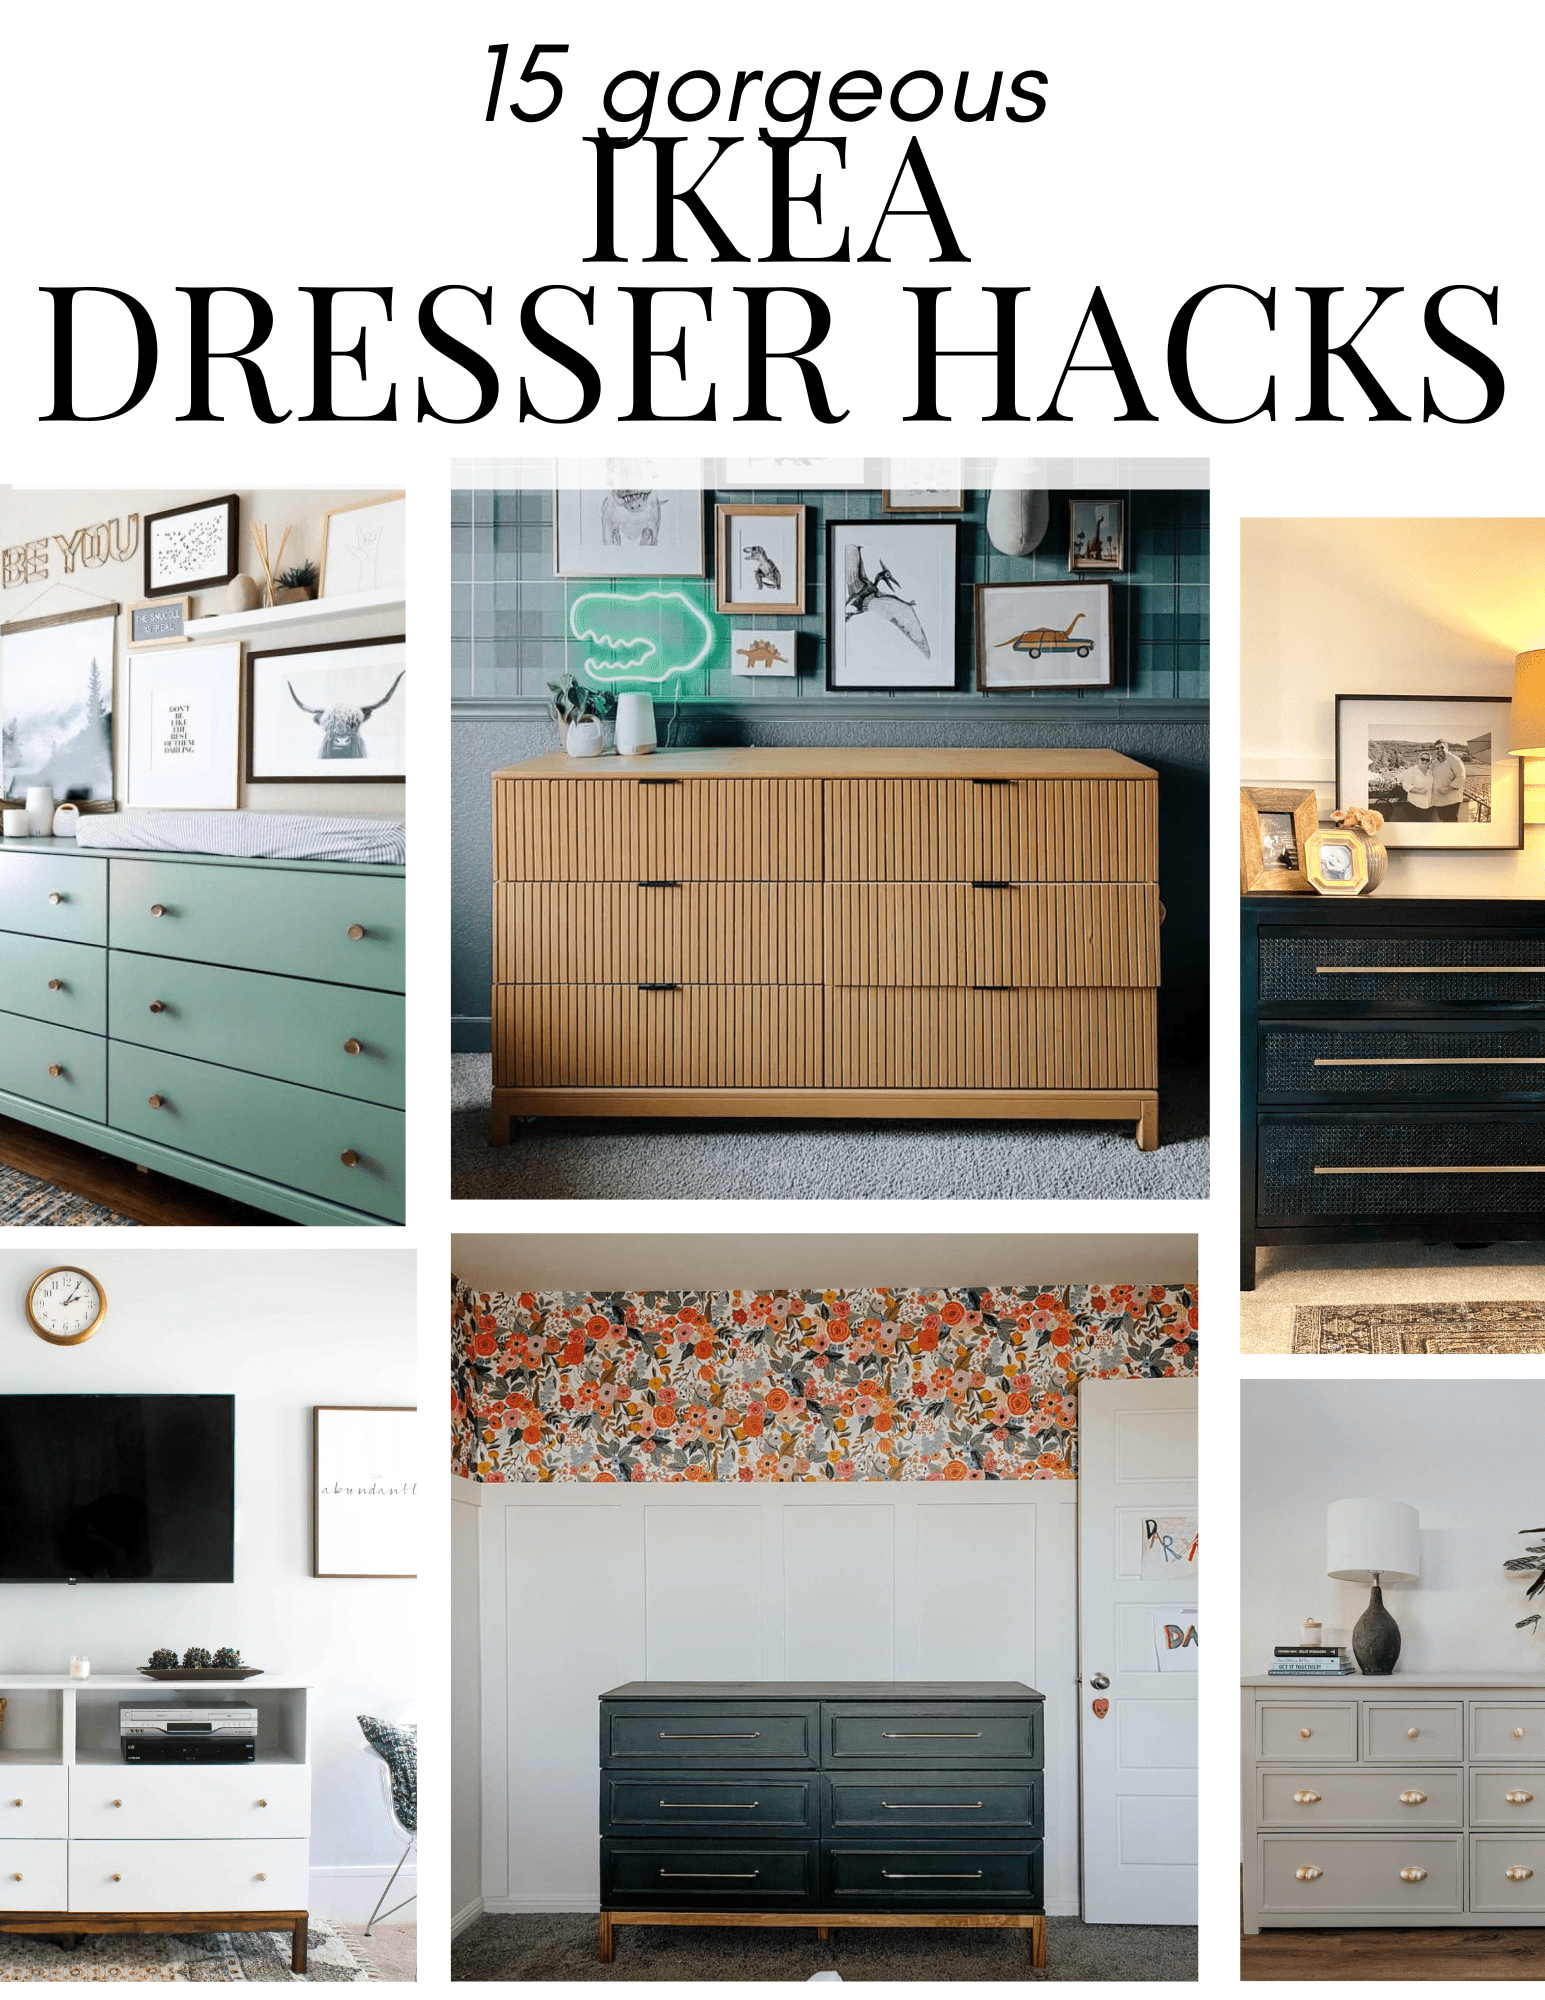 15 Gorgeous IKEA Dresser Hacks